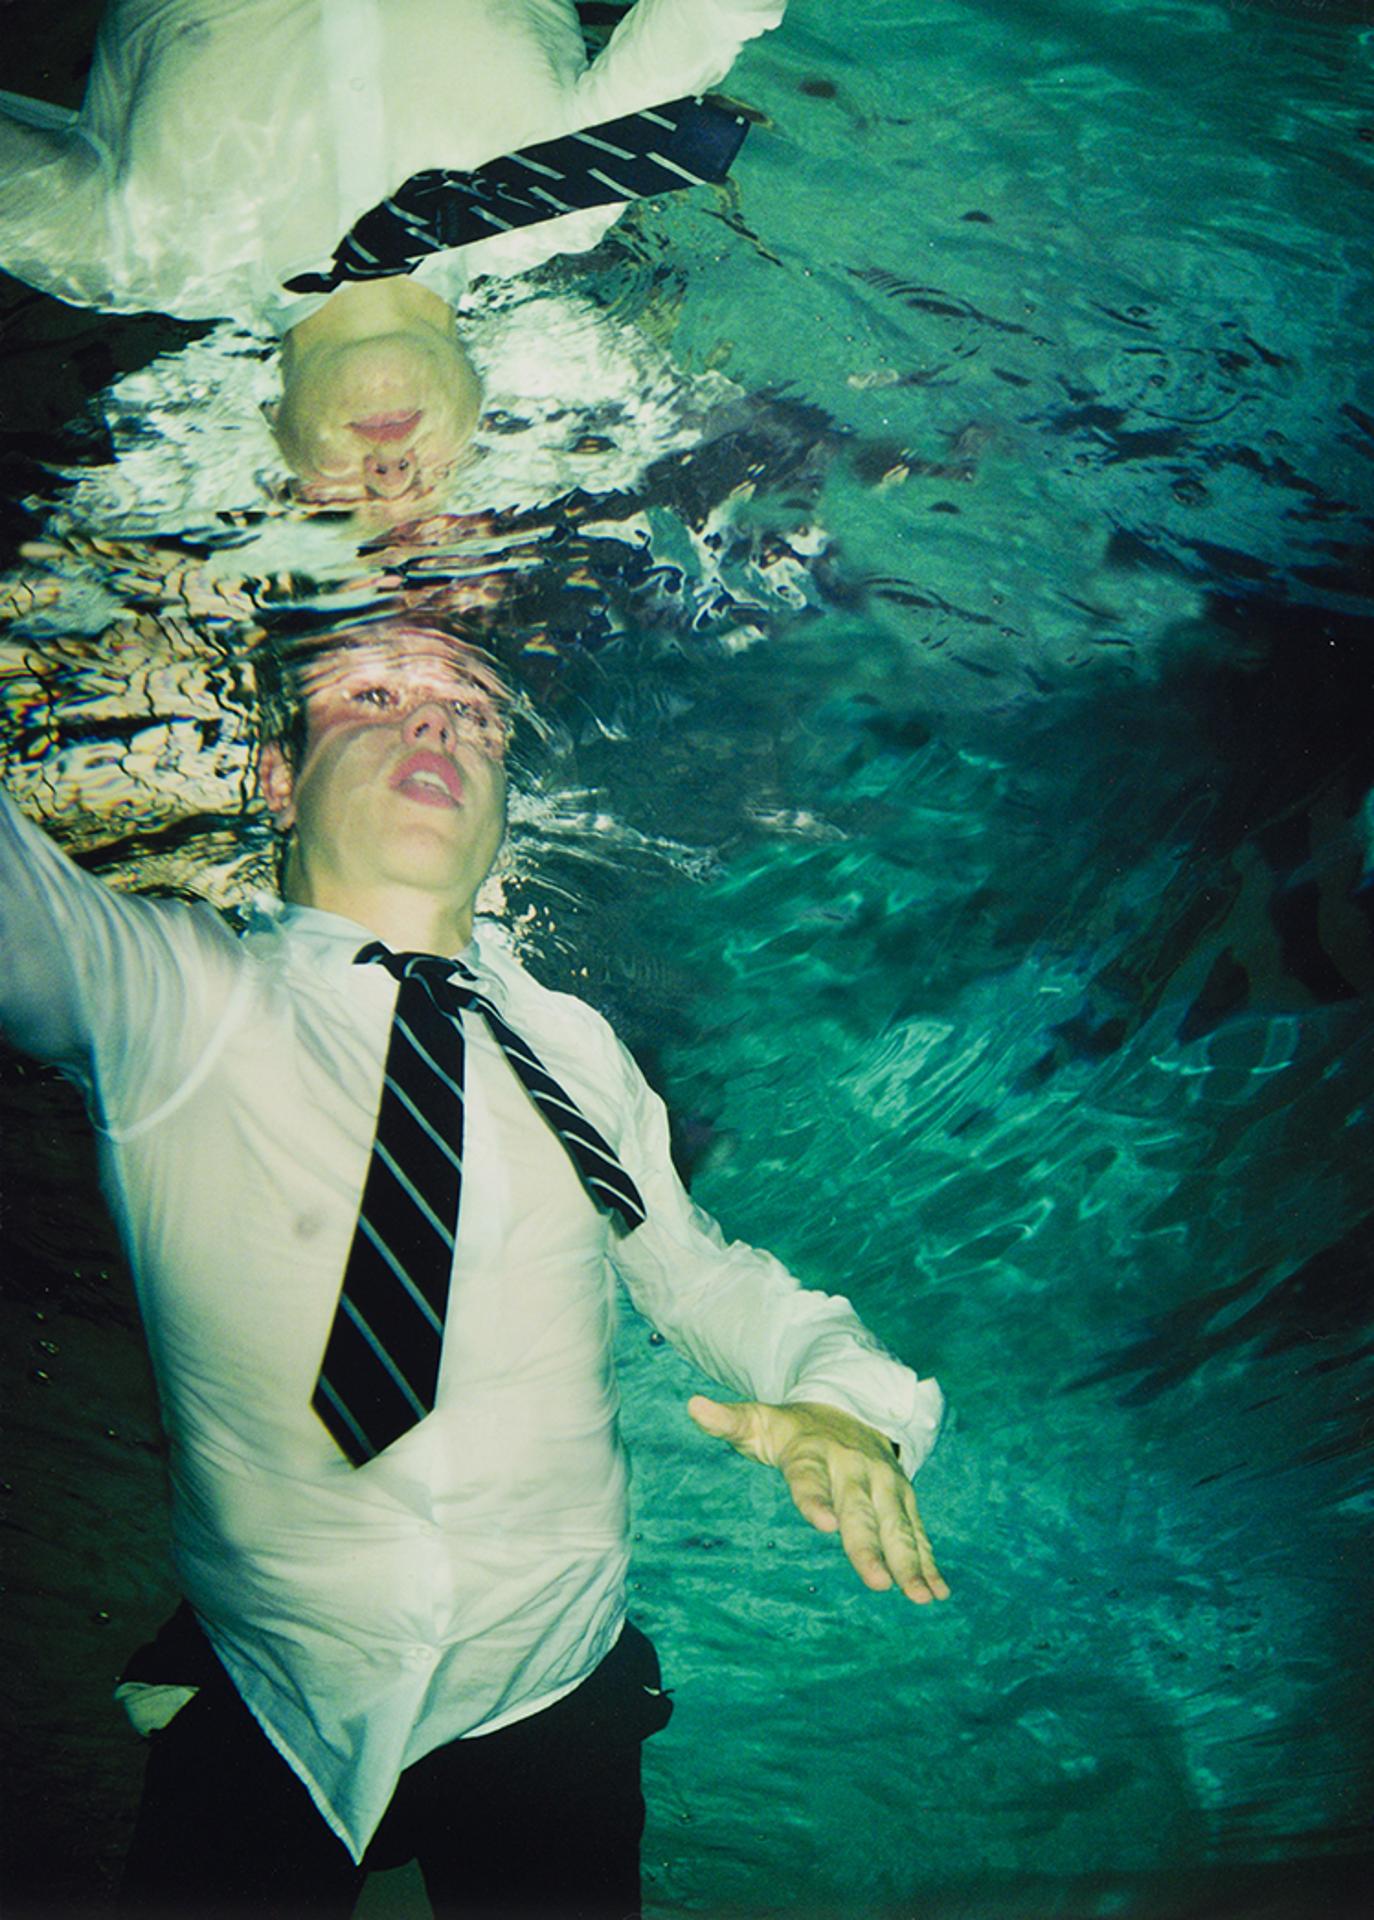 Anthony Goicolea (1971) - Under V from Underwater